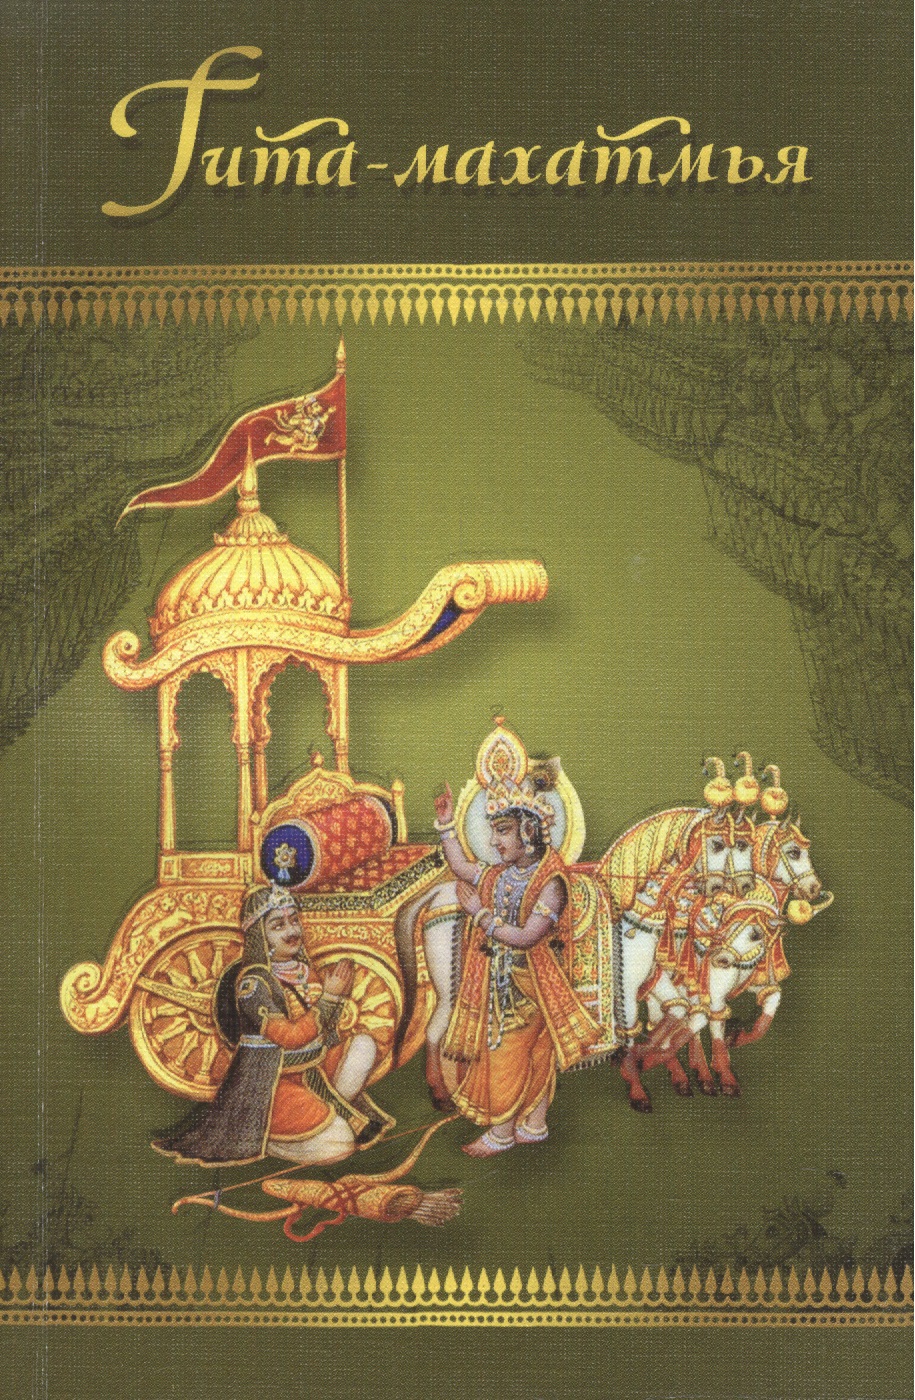 Гита-махатмья. Прославление Бхагавад-гиты из Падма-пураны казначеева а бхагавад гита мистическая часть махабхараты